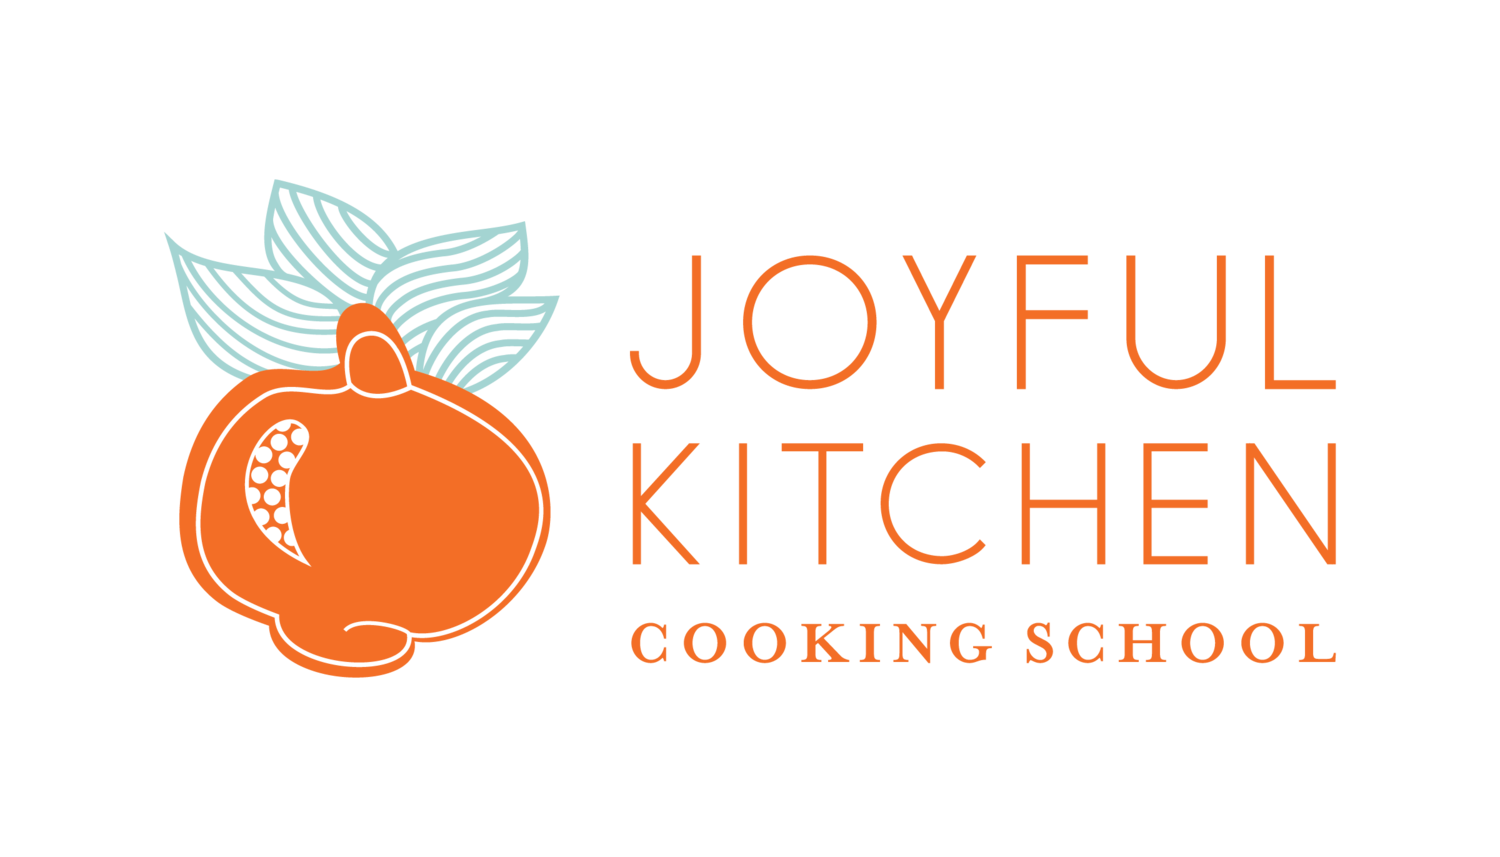 Joyful Kitchen Cooking School